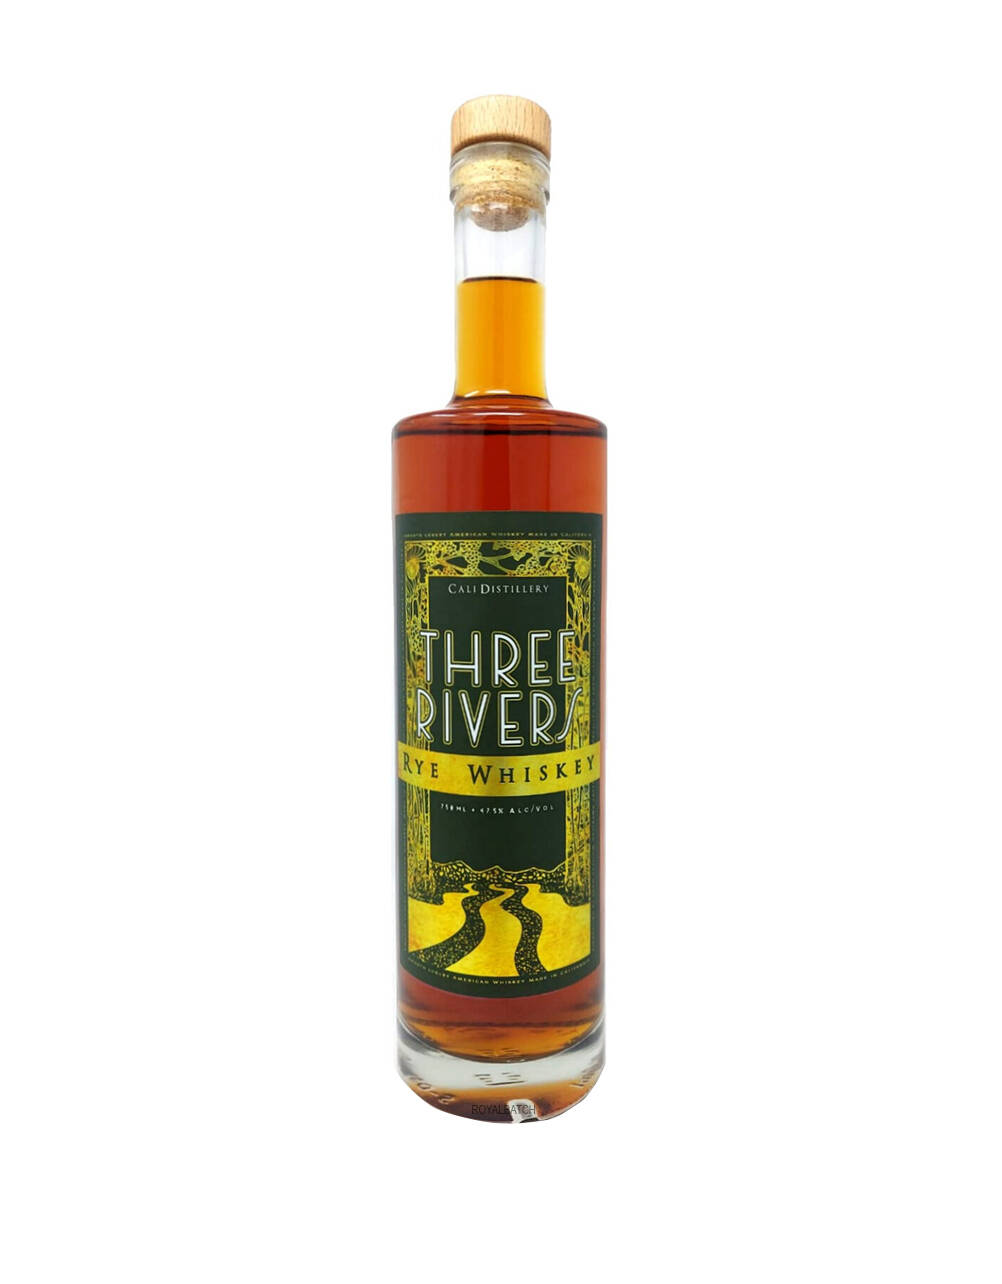 Cali Distillery Three Rivers Rye Whiskey